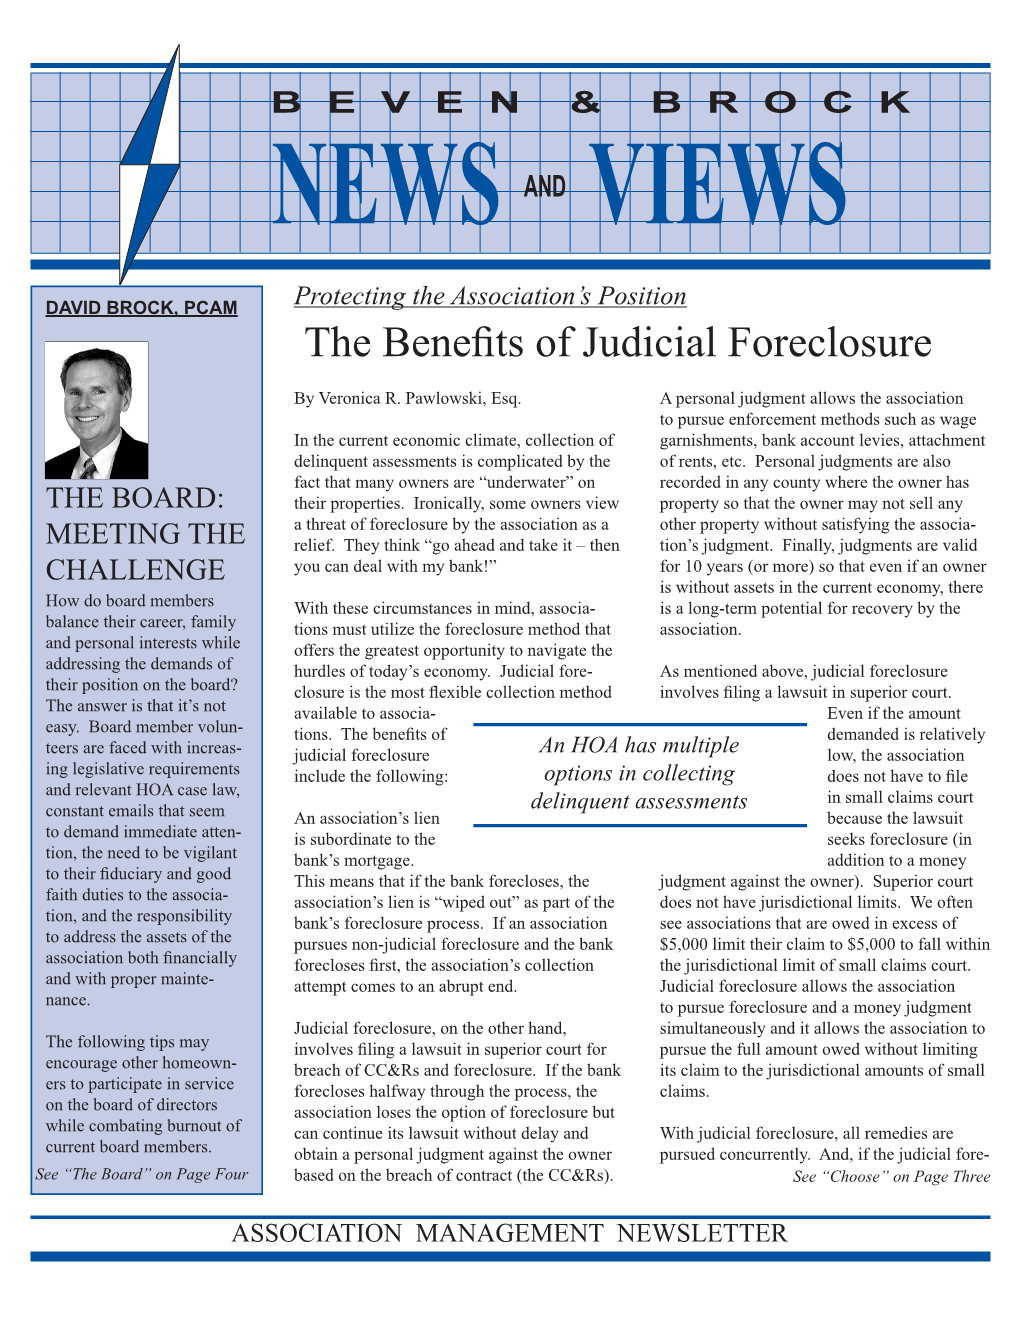 The Benefits of Judicial Foreclosure